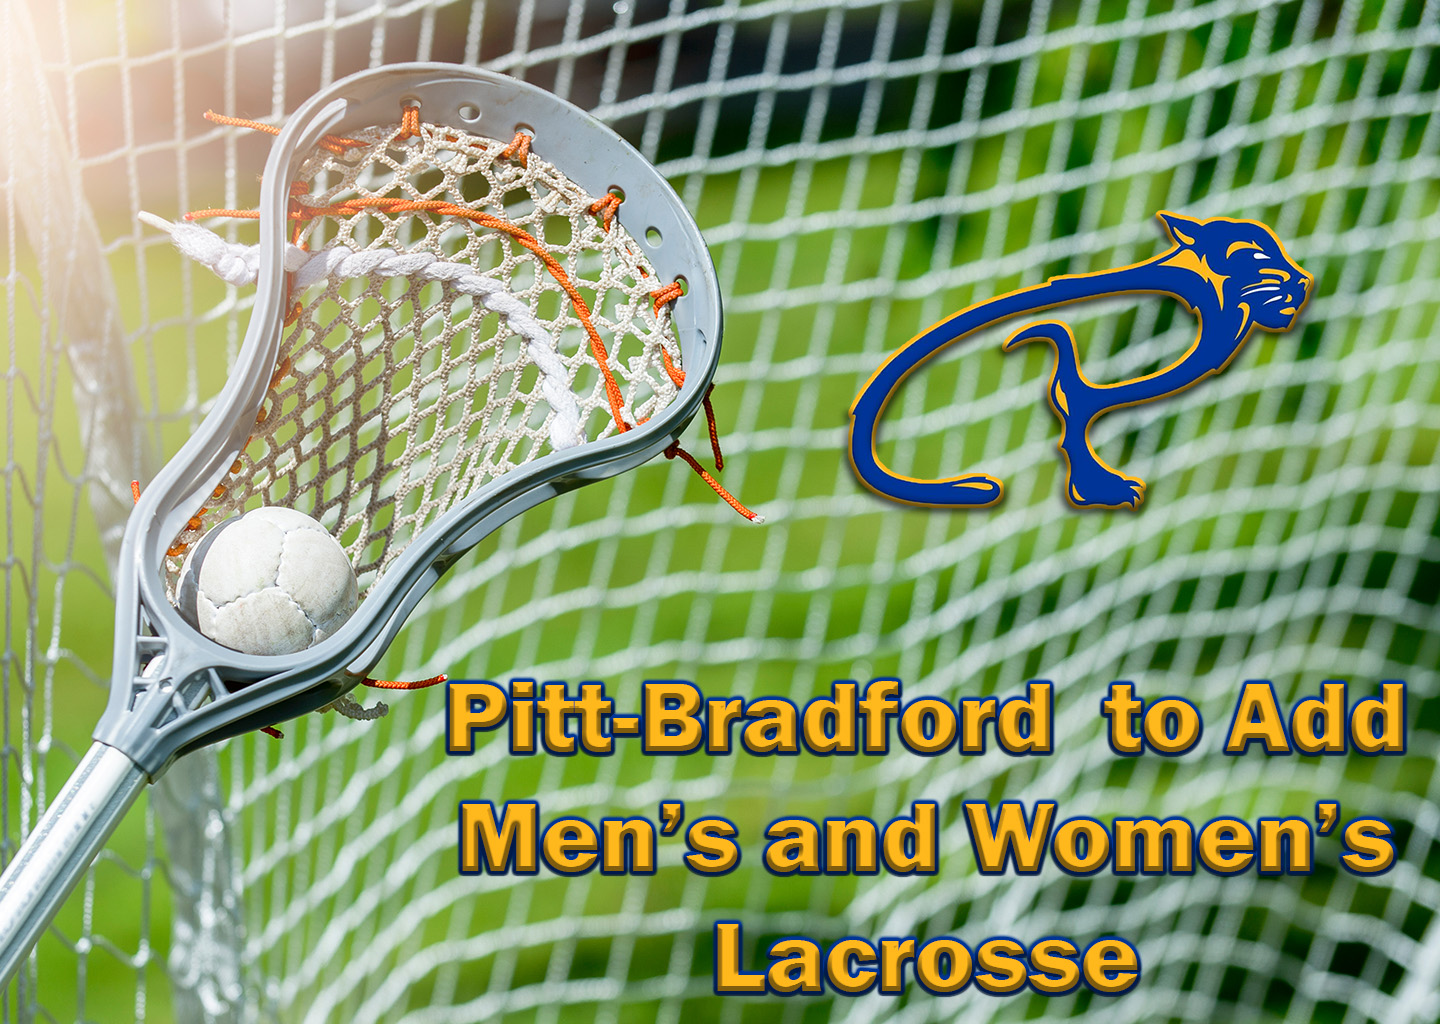 Pitt-Bradford to Add Men's and Women's Lacrosse